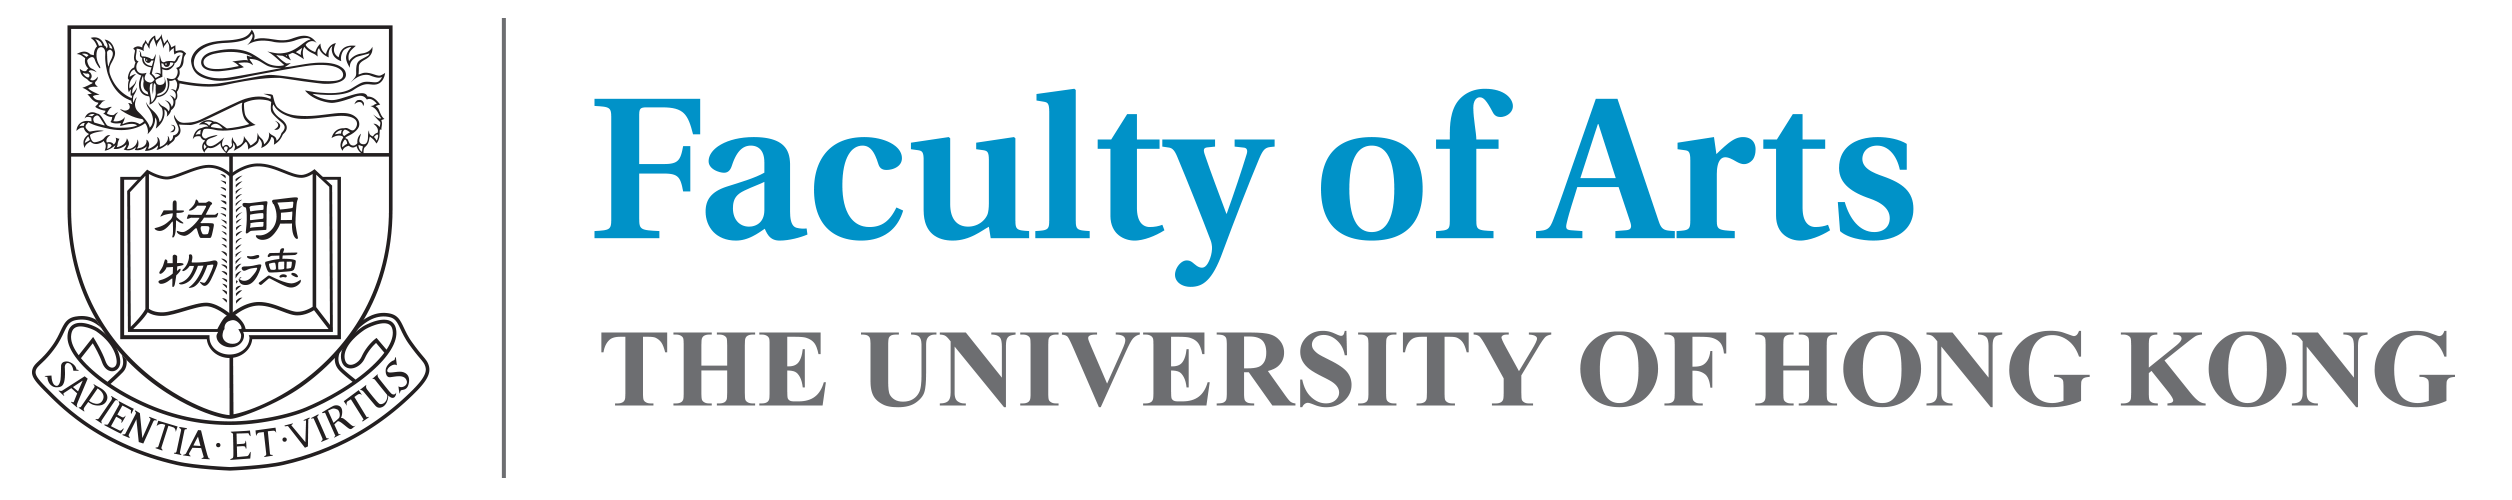 Faculty-of-Arts-logo